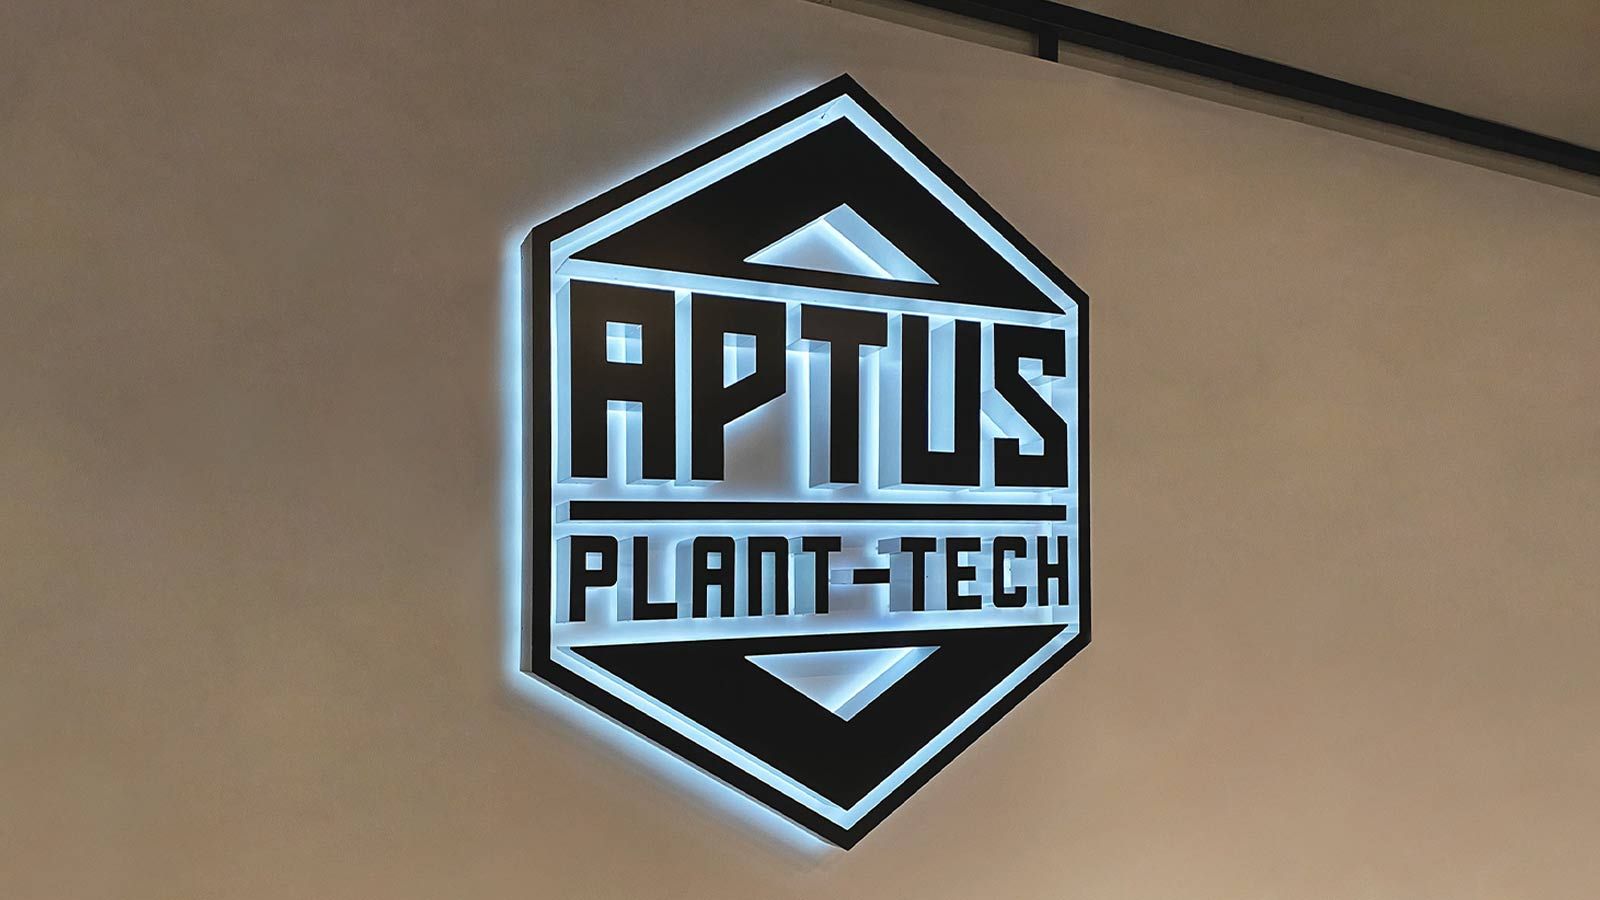 Aptus Plant-tech backlit sign